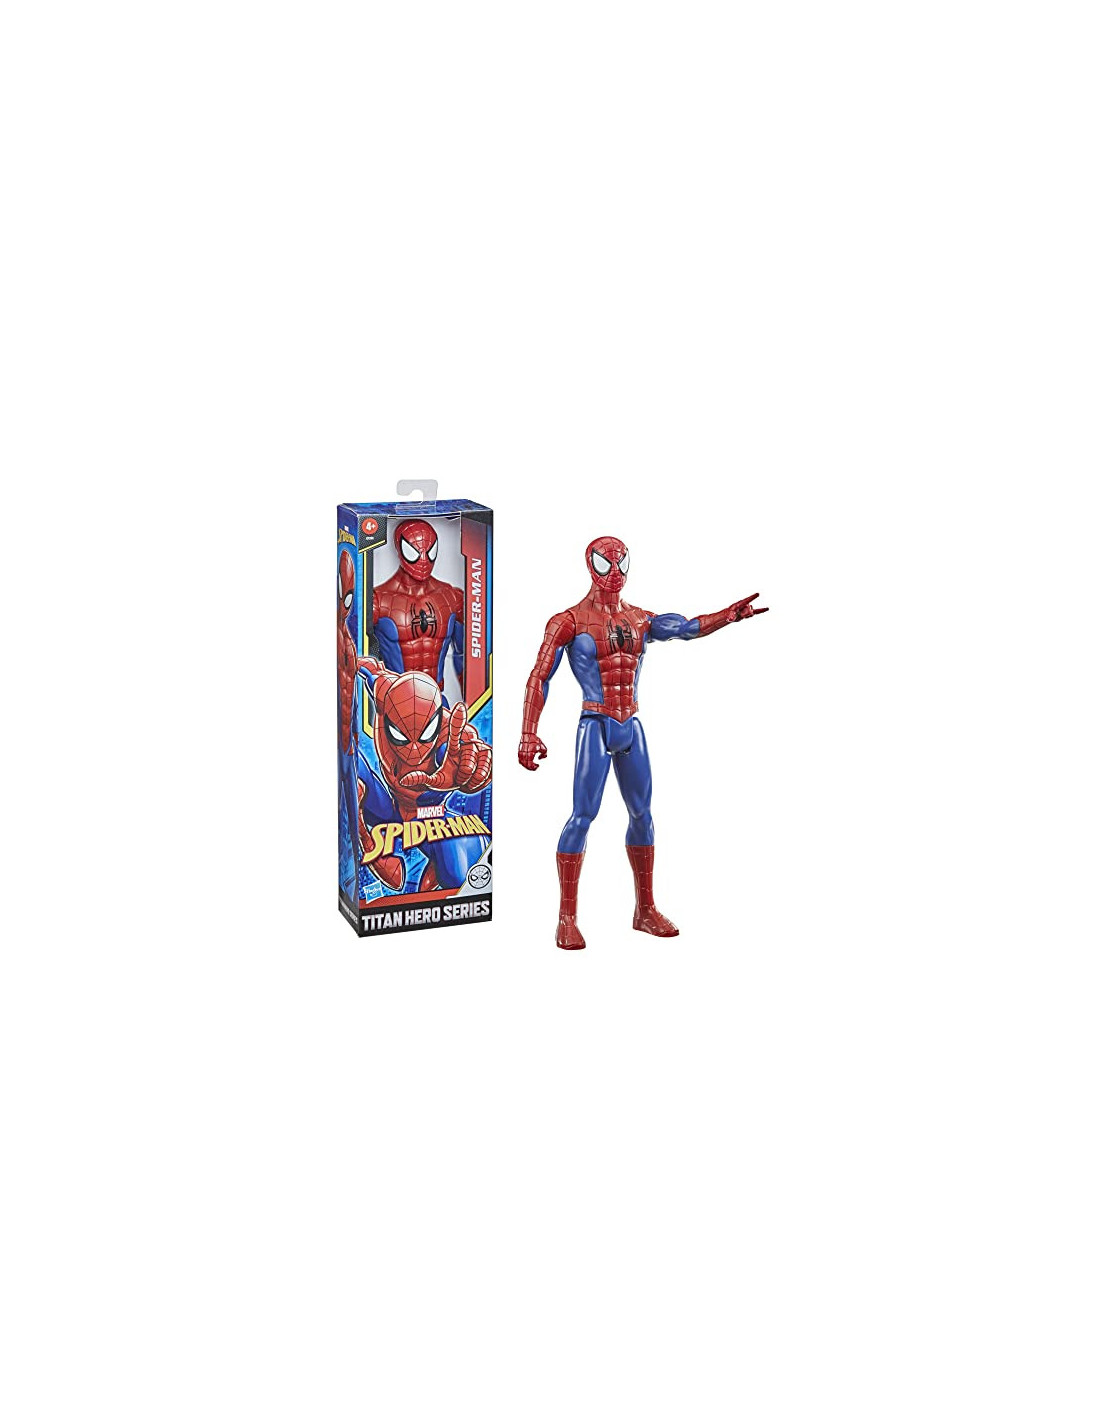 Figurine articulée Spider-Man Titan Hero Series - Spider-Man, Commandez  facilement en ligne